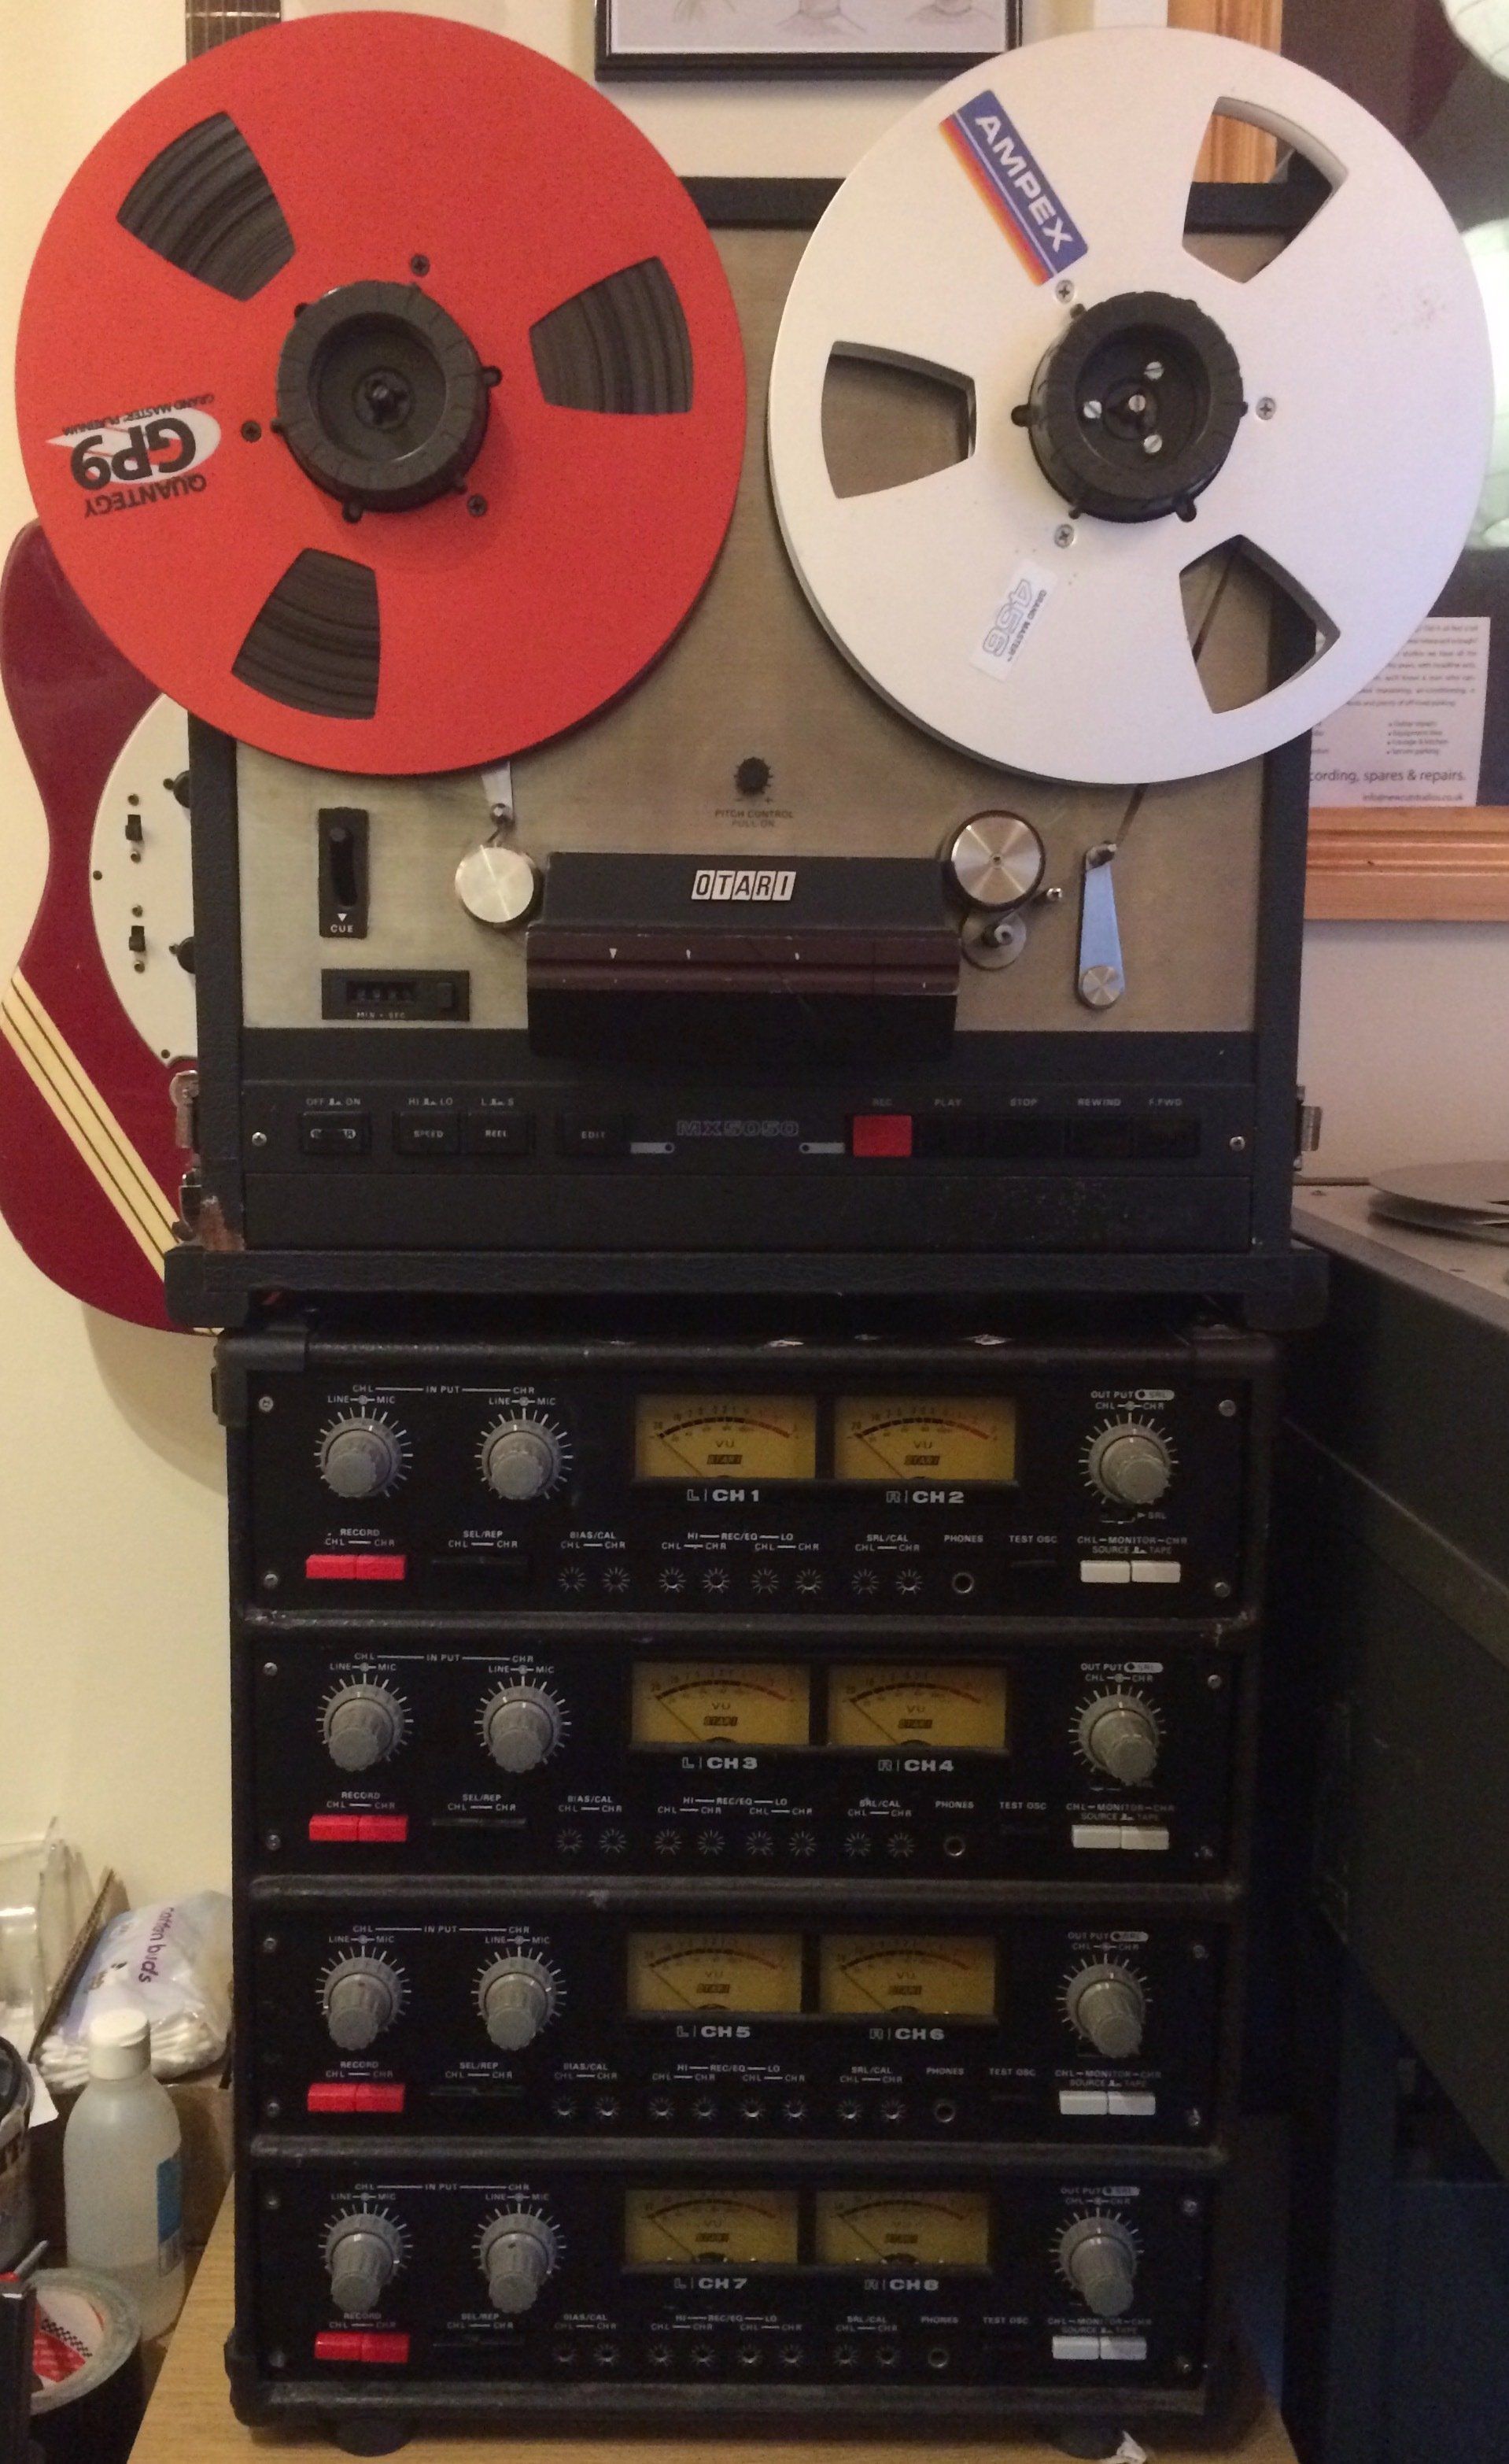 Otari MX5050 8-track analogue tape recorder at New Cut Studios Bristol